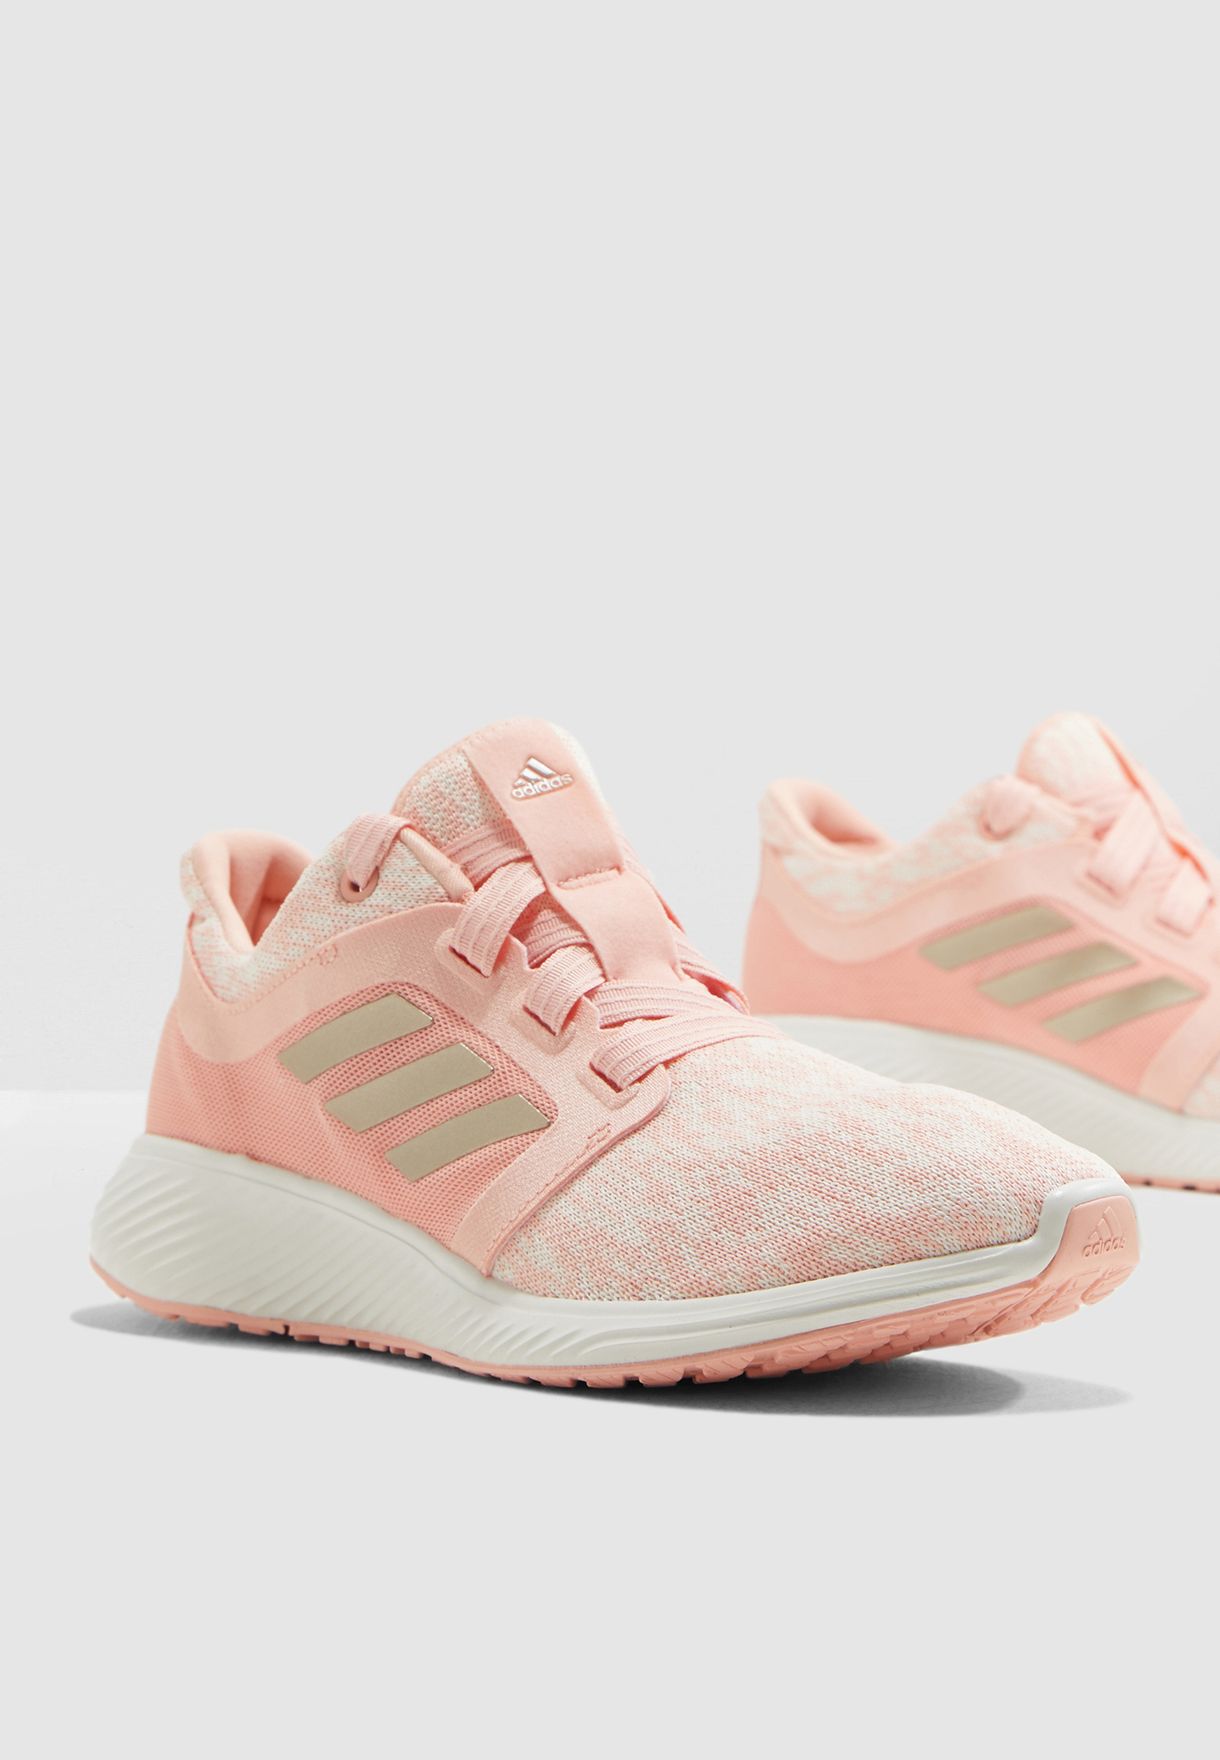 adidas edge lux pink